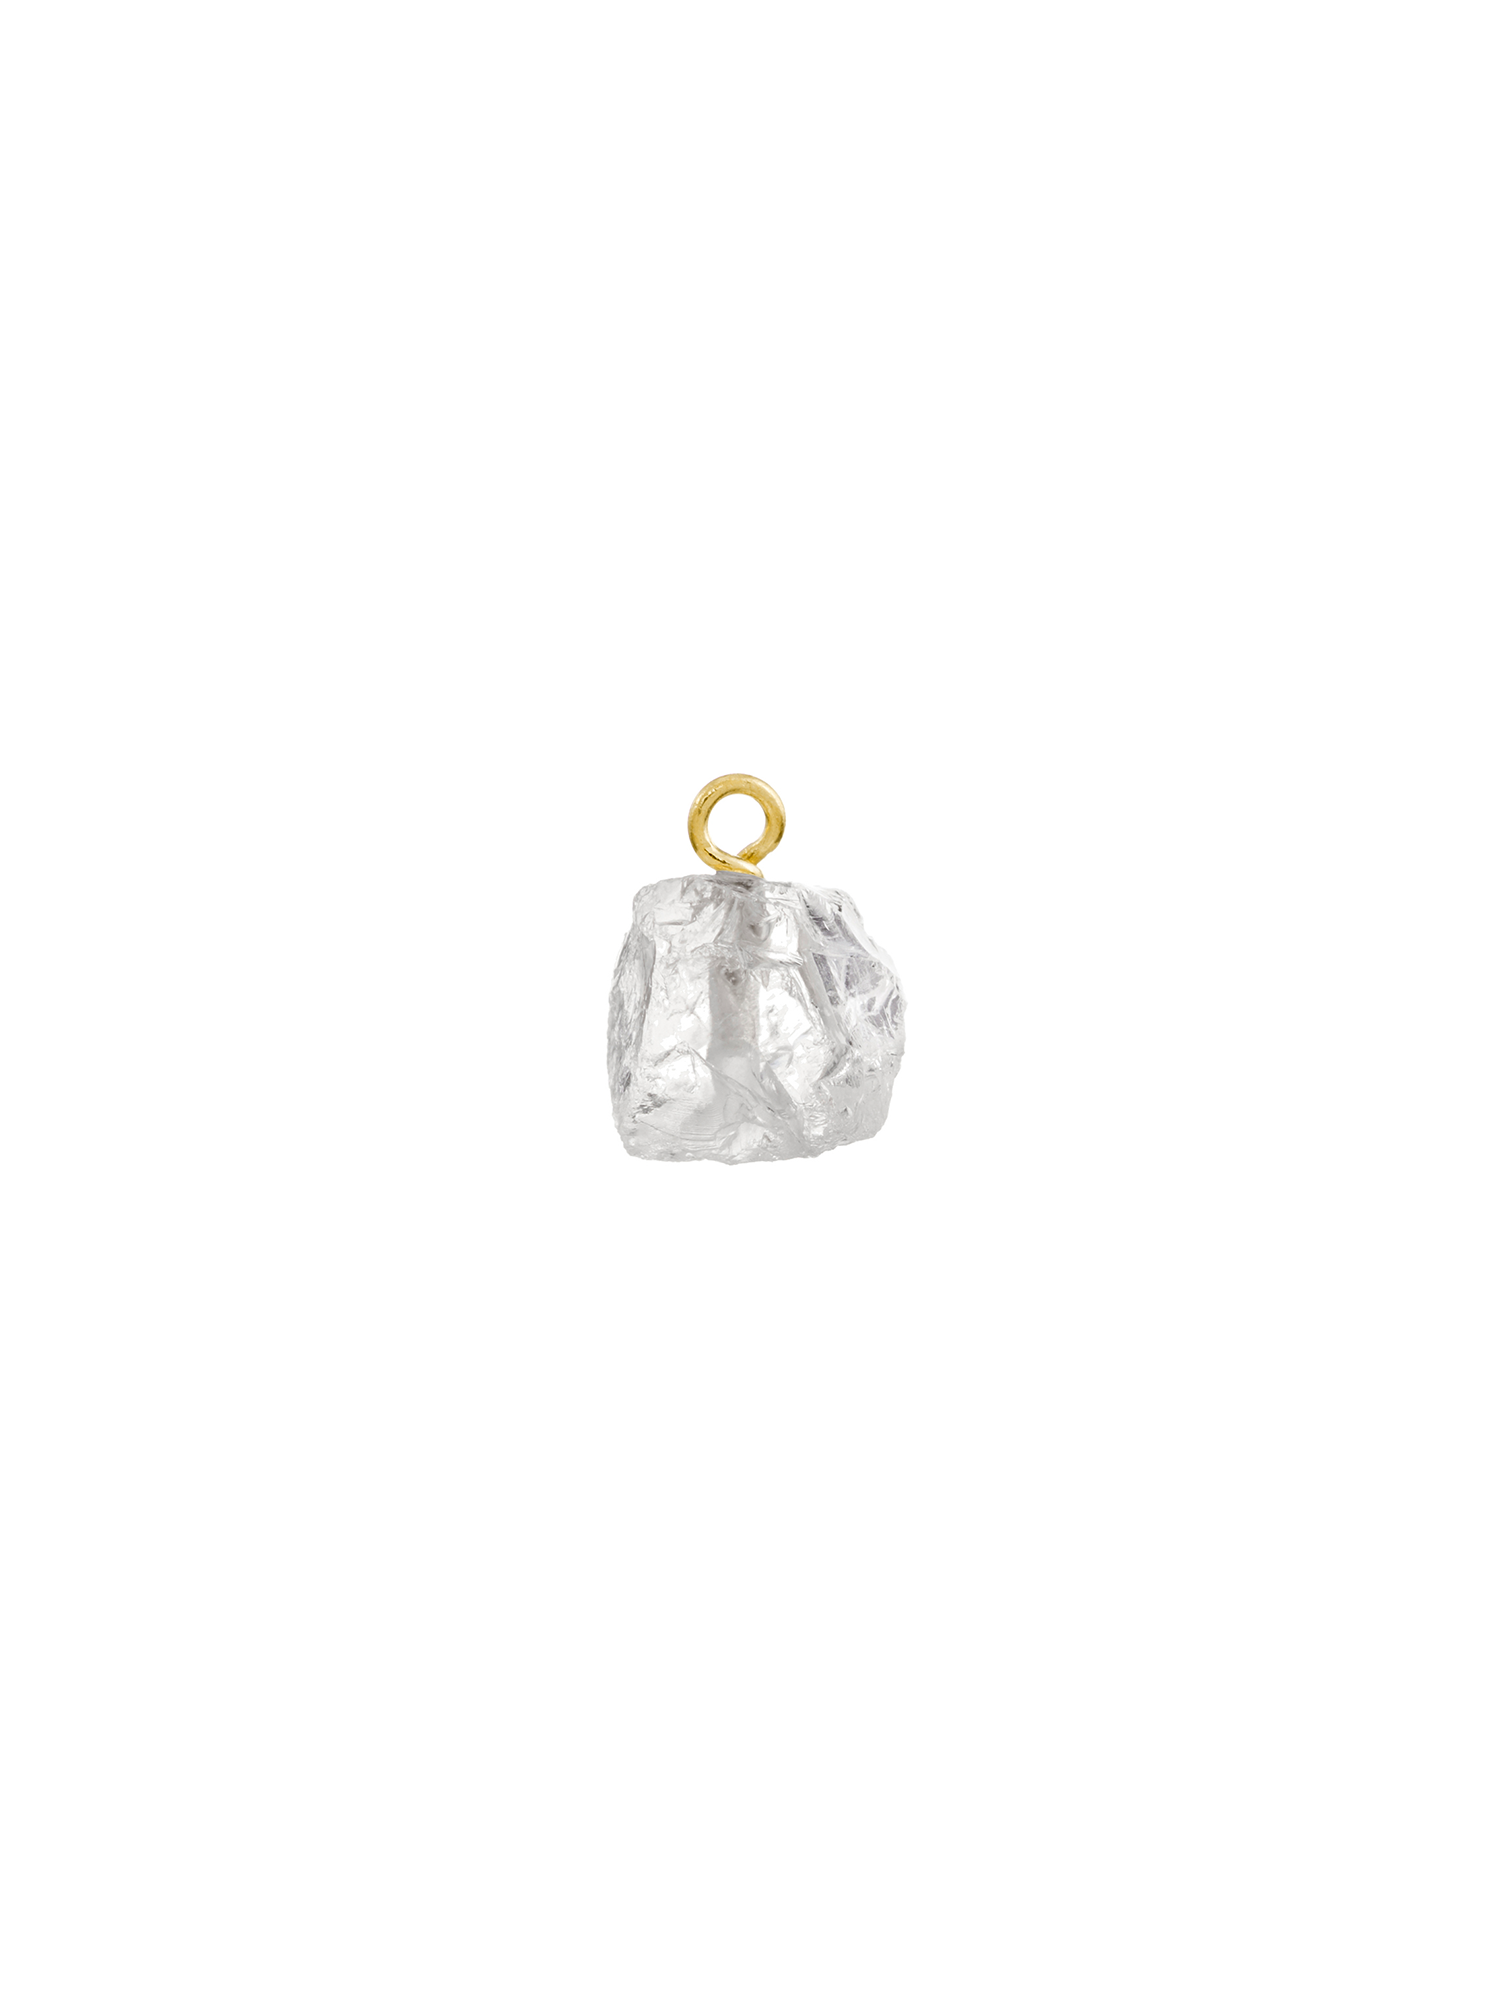 raw quartz earring charm | clear quartz